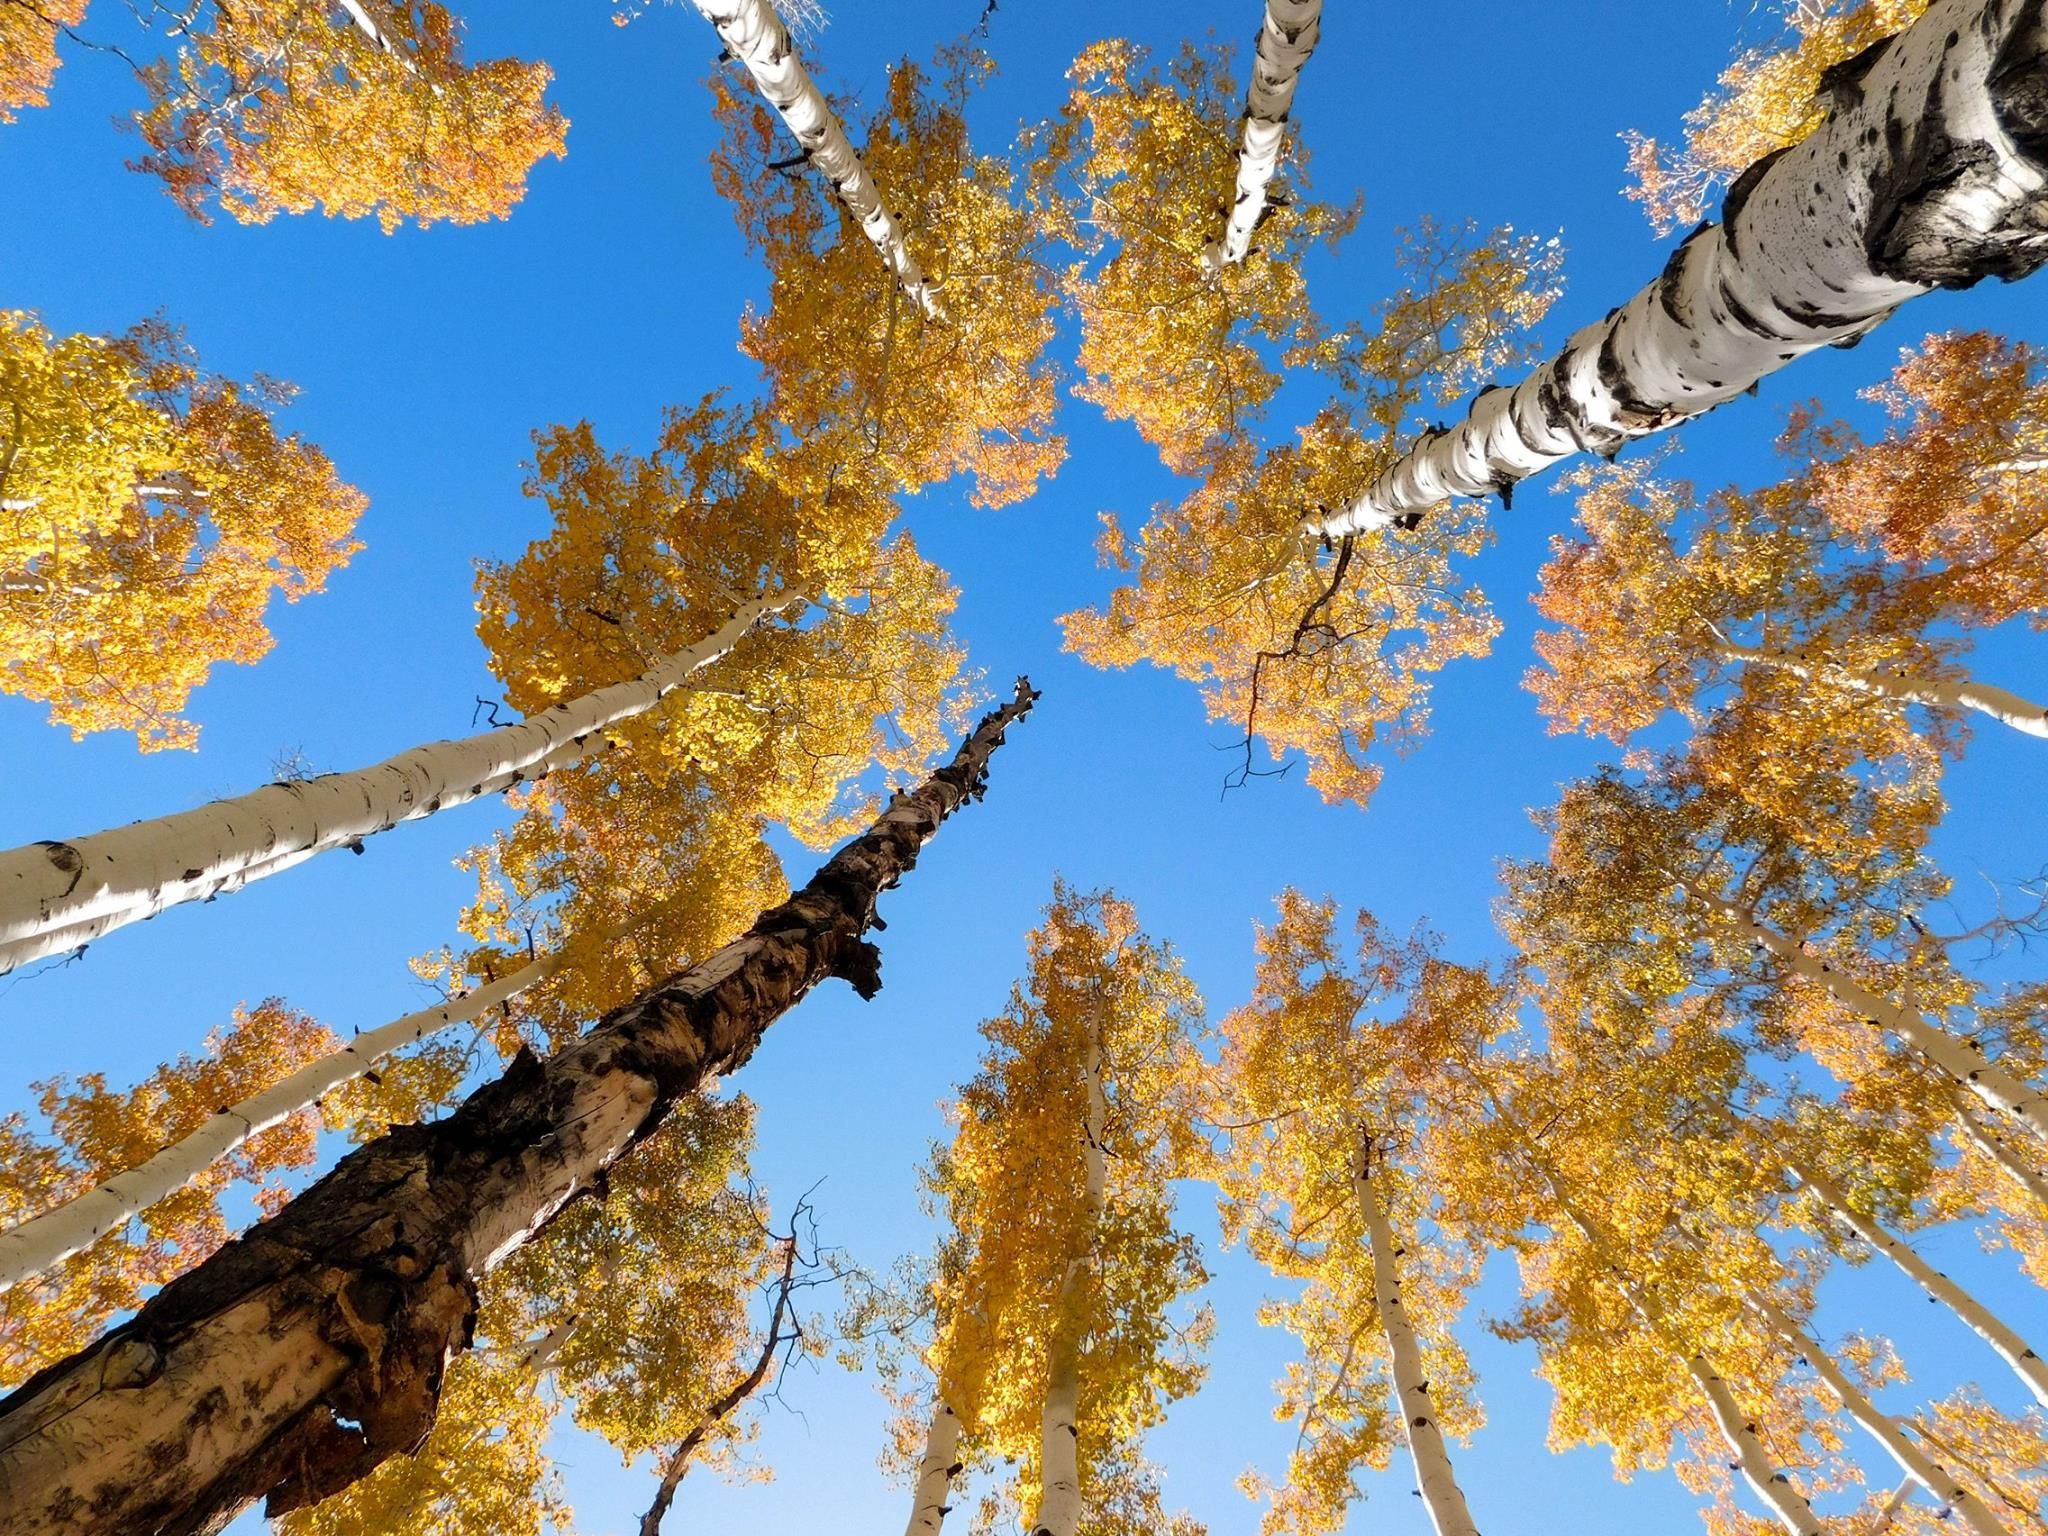 Aspen leaves turn gold against a bright blue sky.